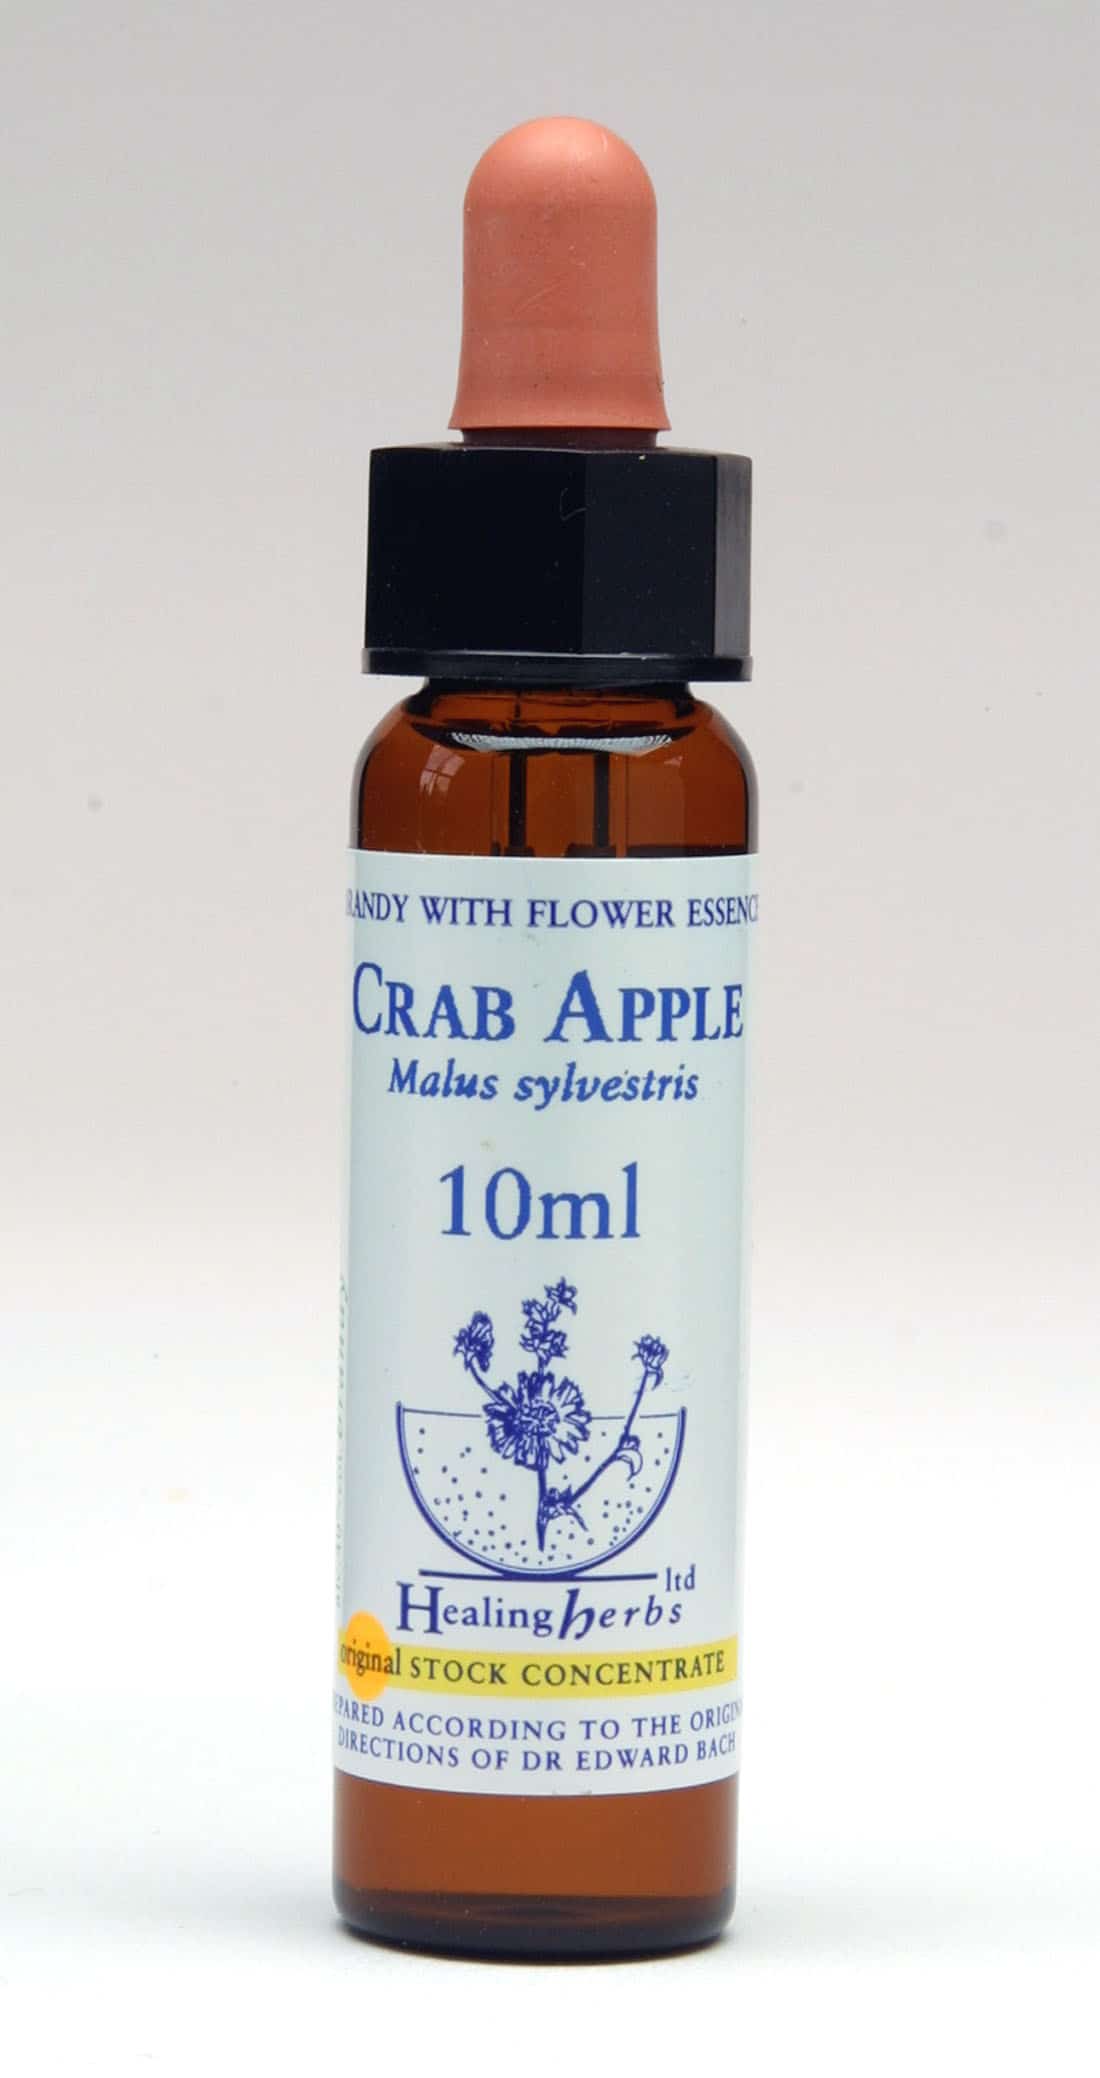 Crab Apple Flor de Bach Healing Herbs